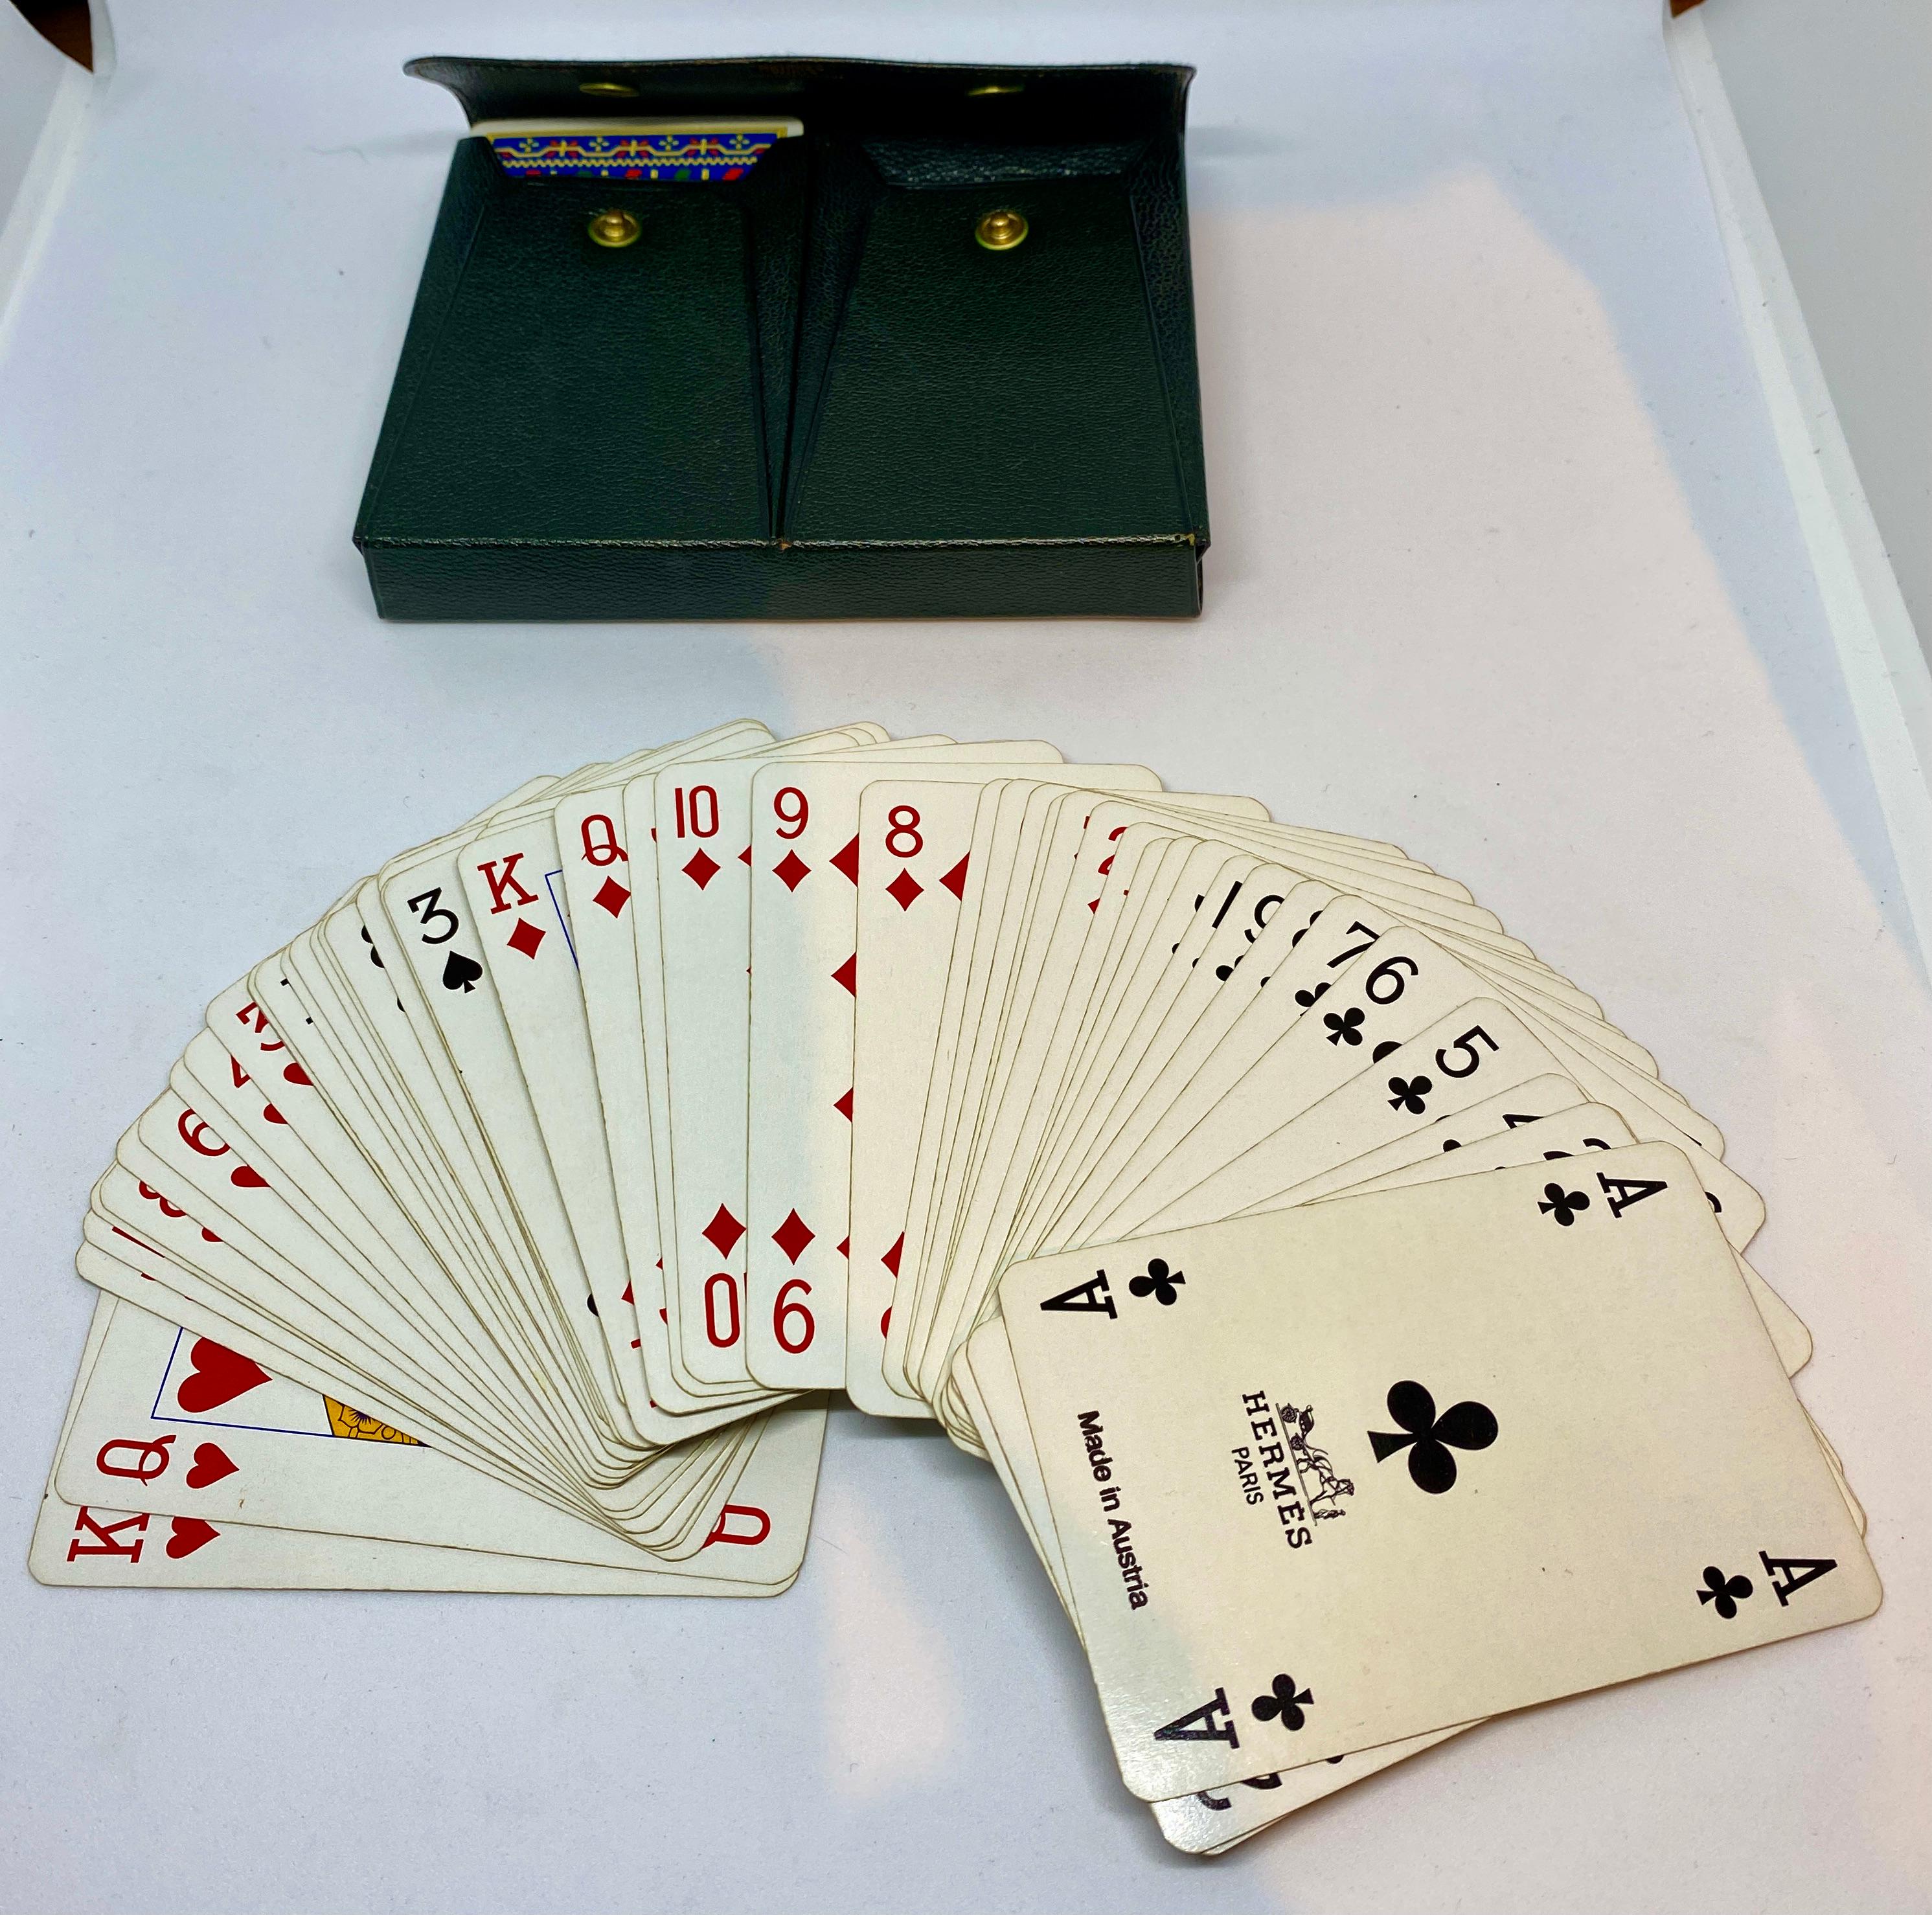 Women's or Men's Hermès Bridge Set Playing Cards in Green Leather Case